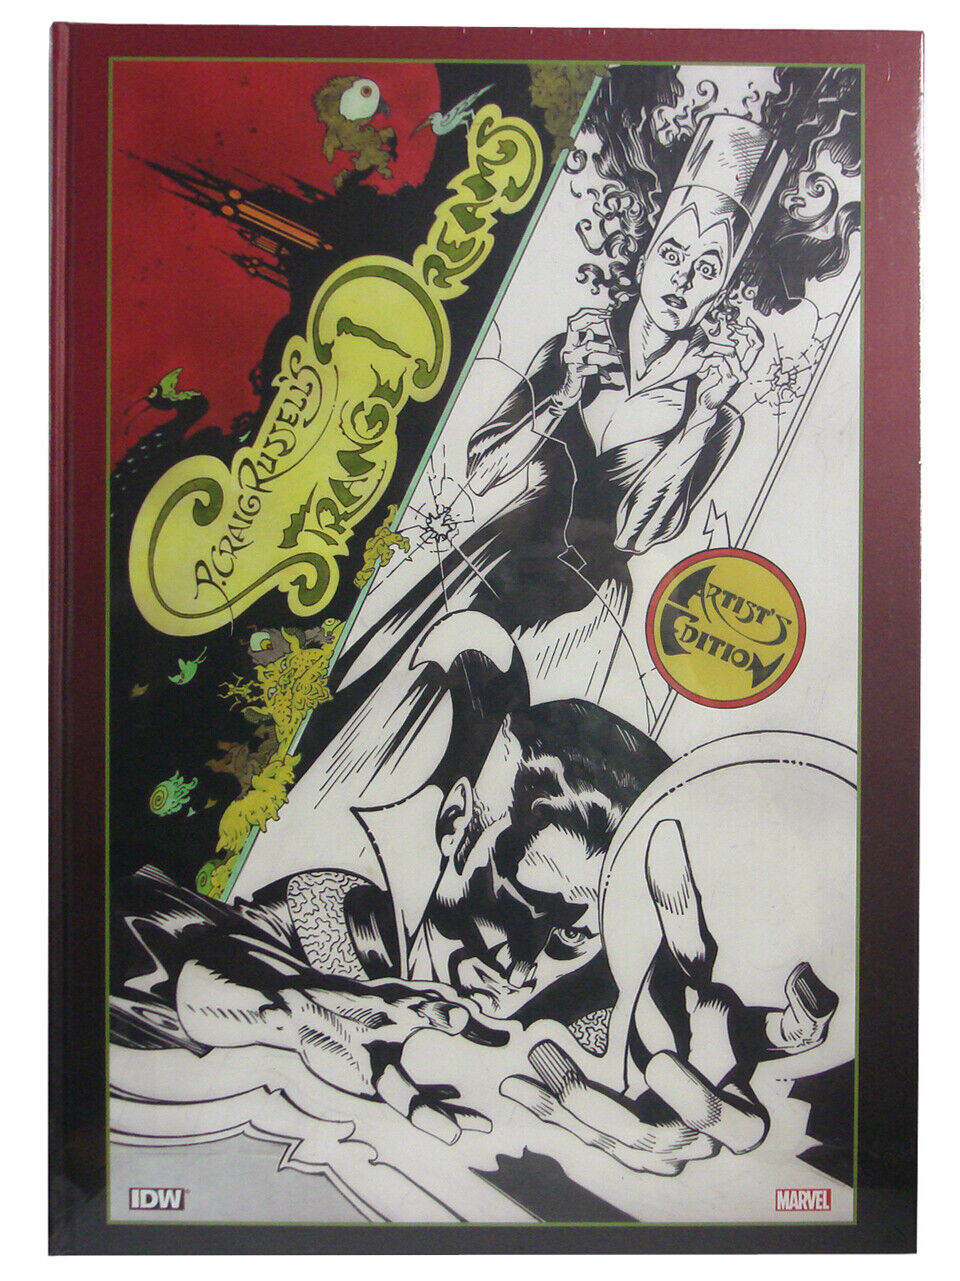 IDW P Craig Russell's Strange Dreams Artist's Edition Hardcover Marvel Comics